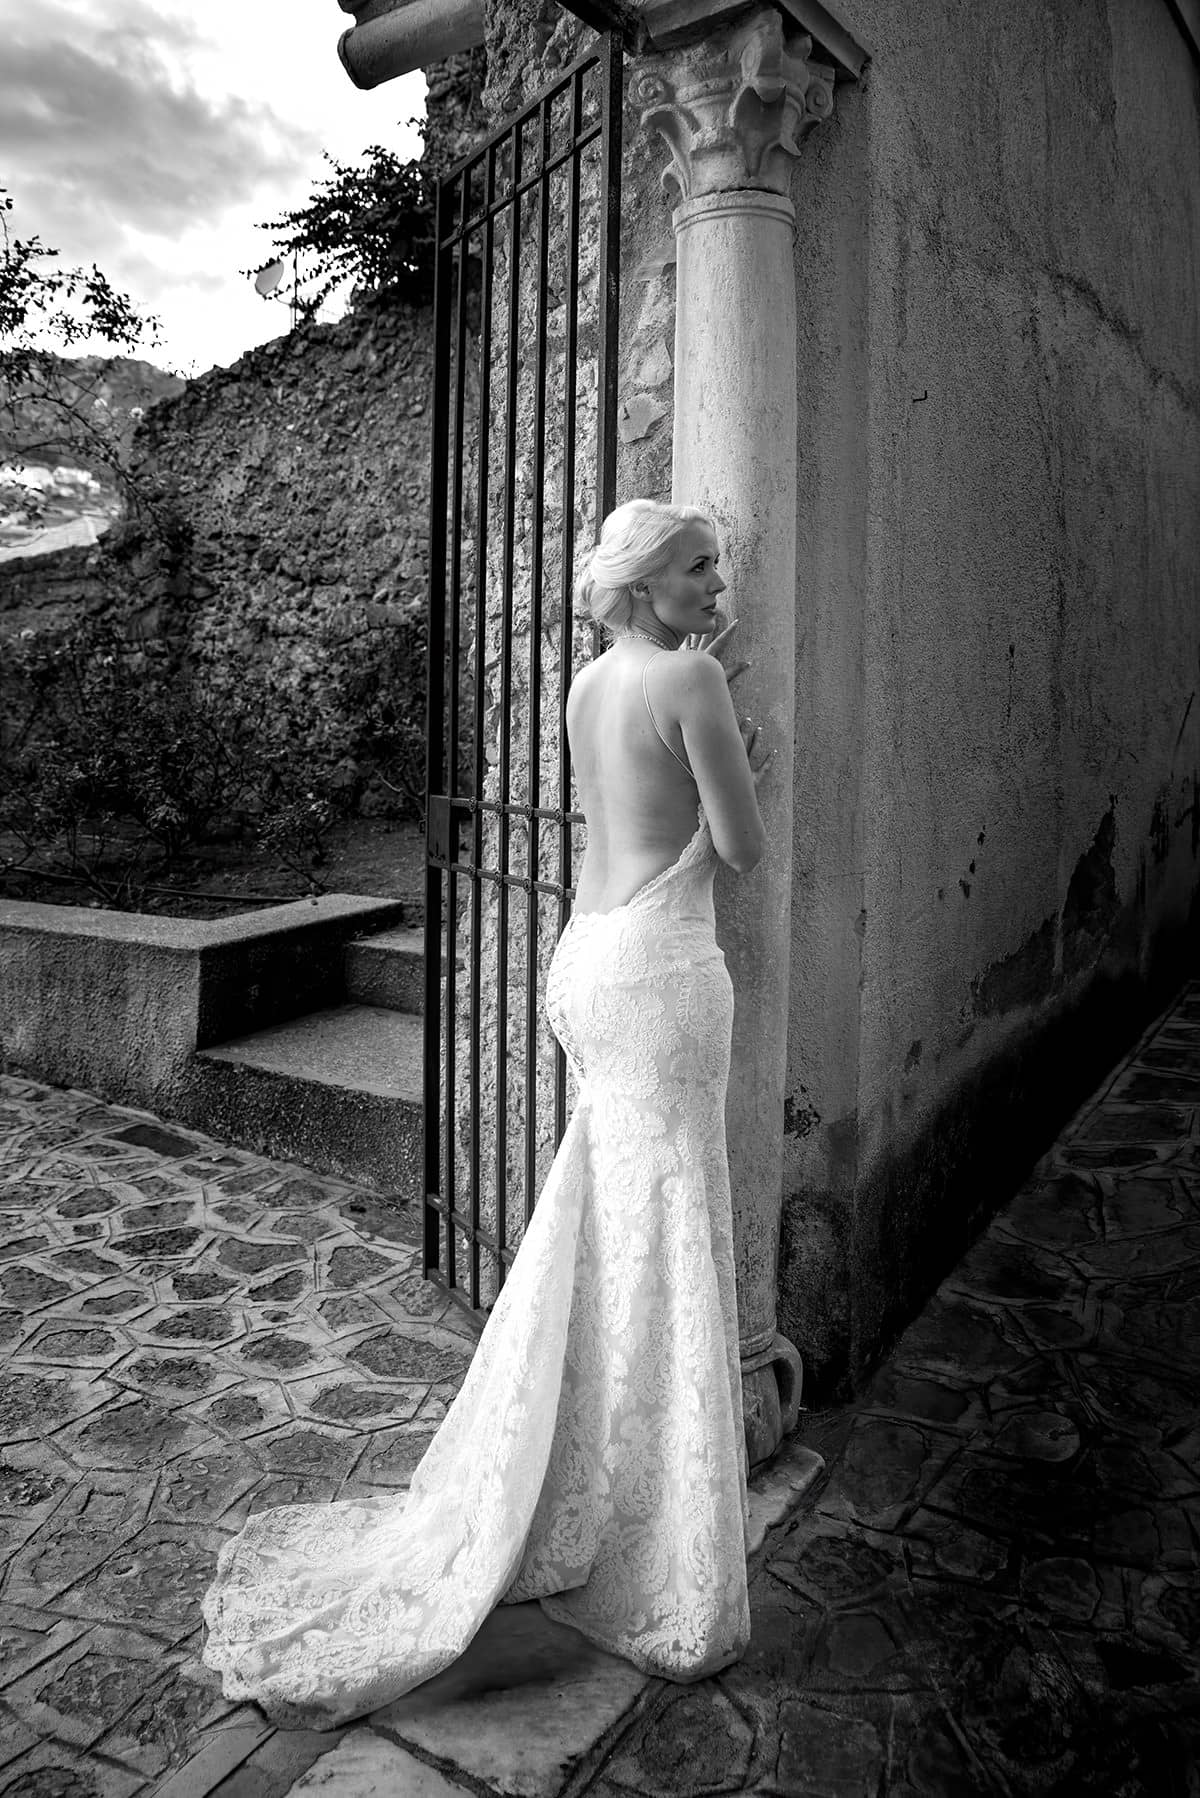 Romantic Italian Weddings - emiliano russo - photographer in ravello